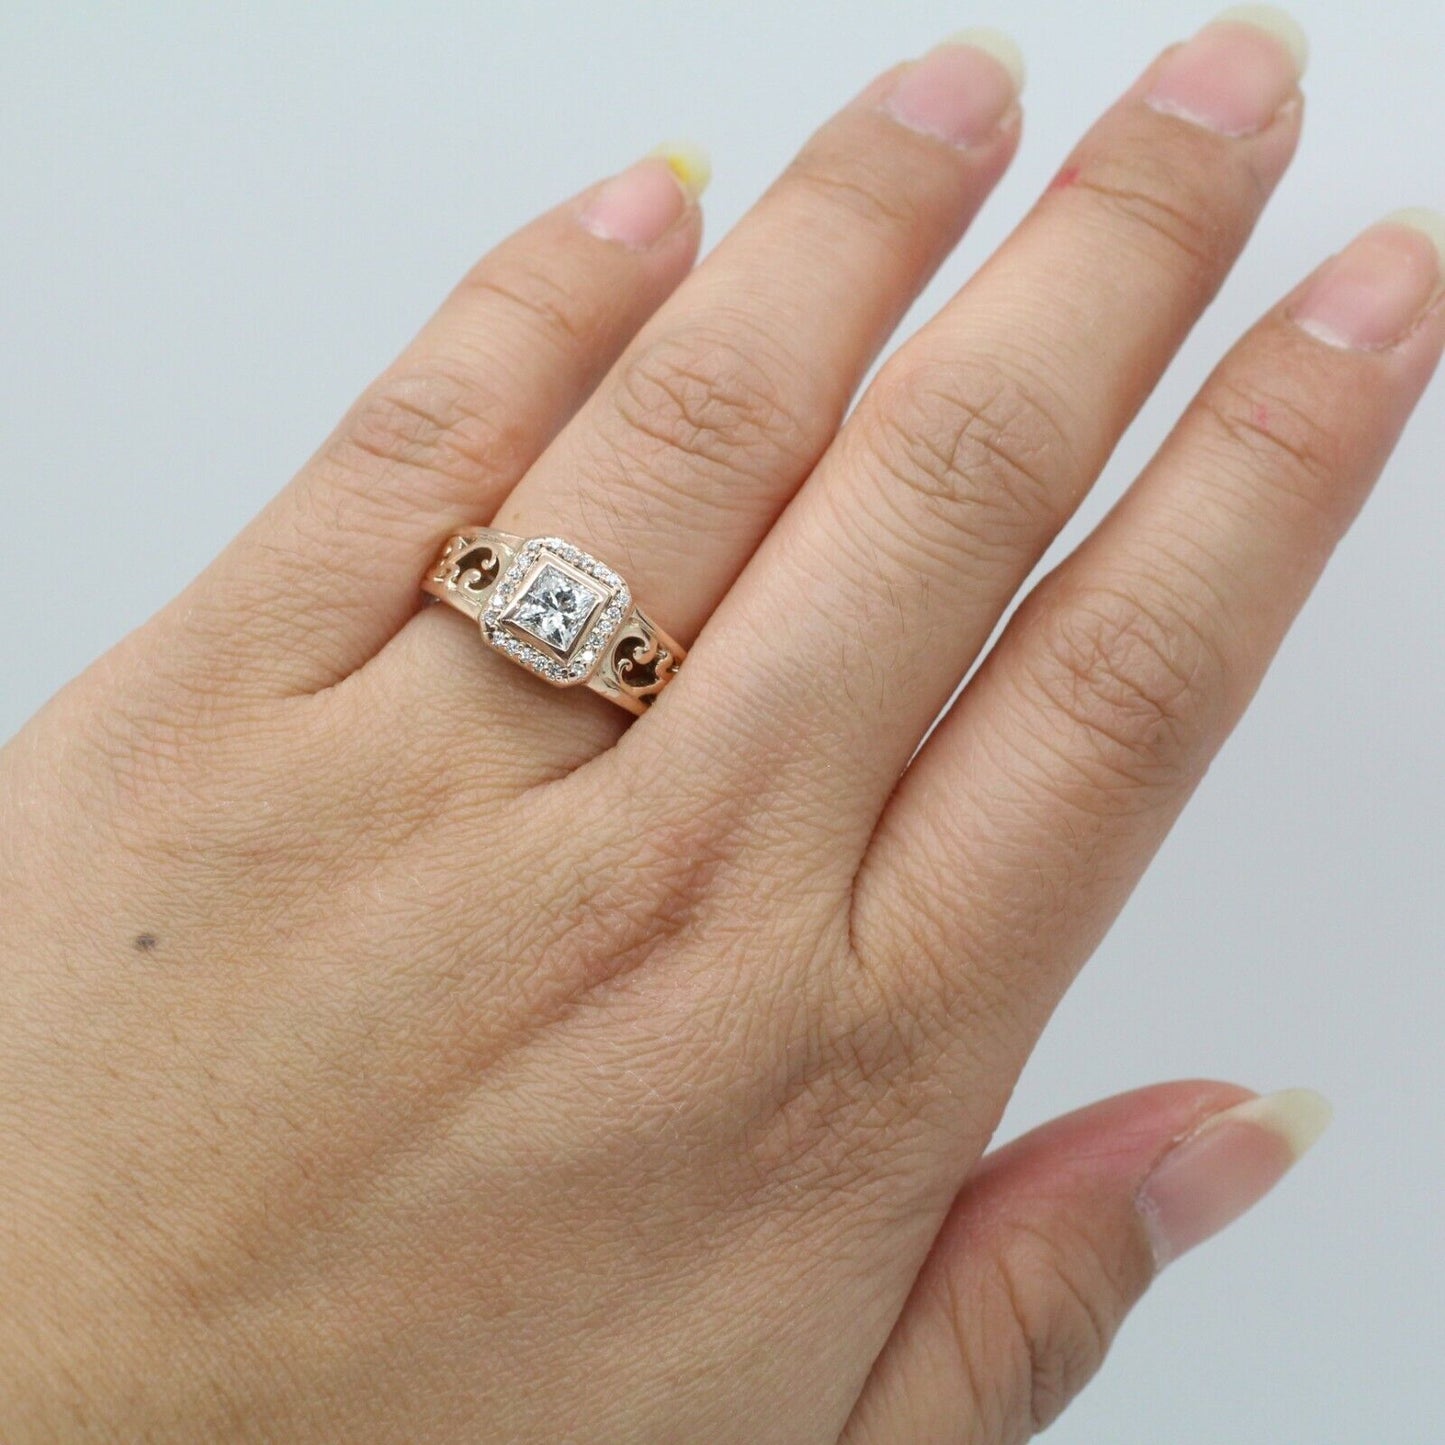 Vintage Filigree Princess Cut Diamond Halo Engagement Ring in 14k Rose Gold